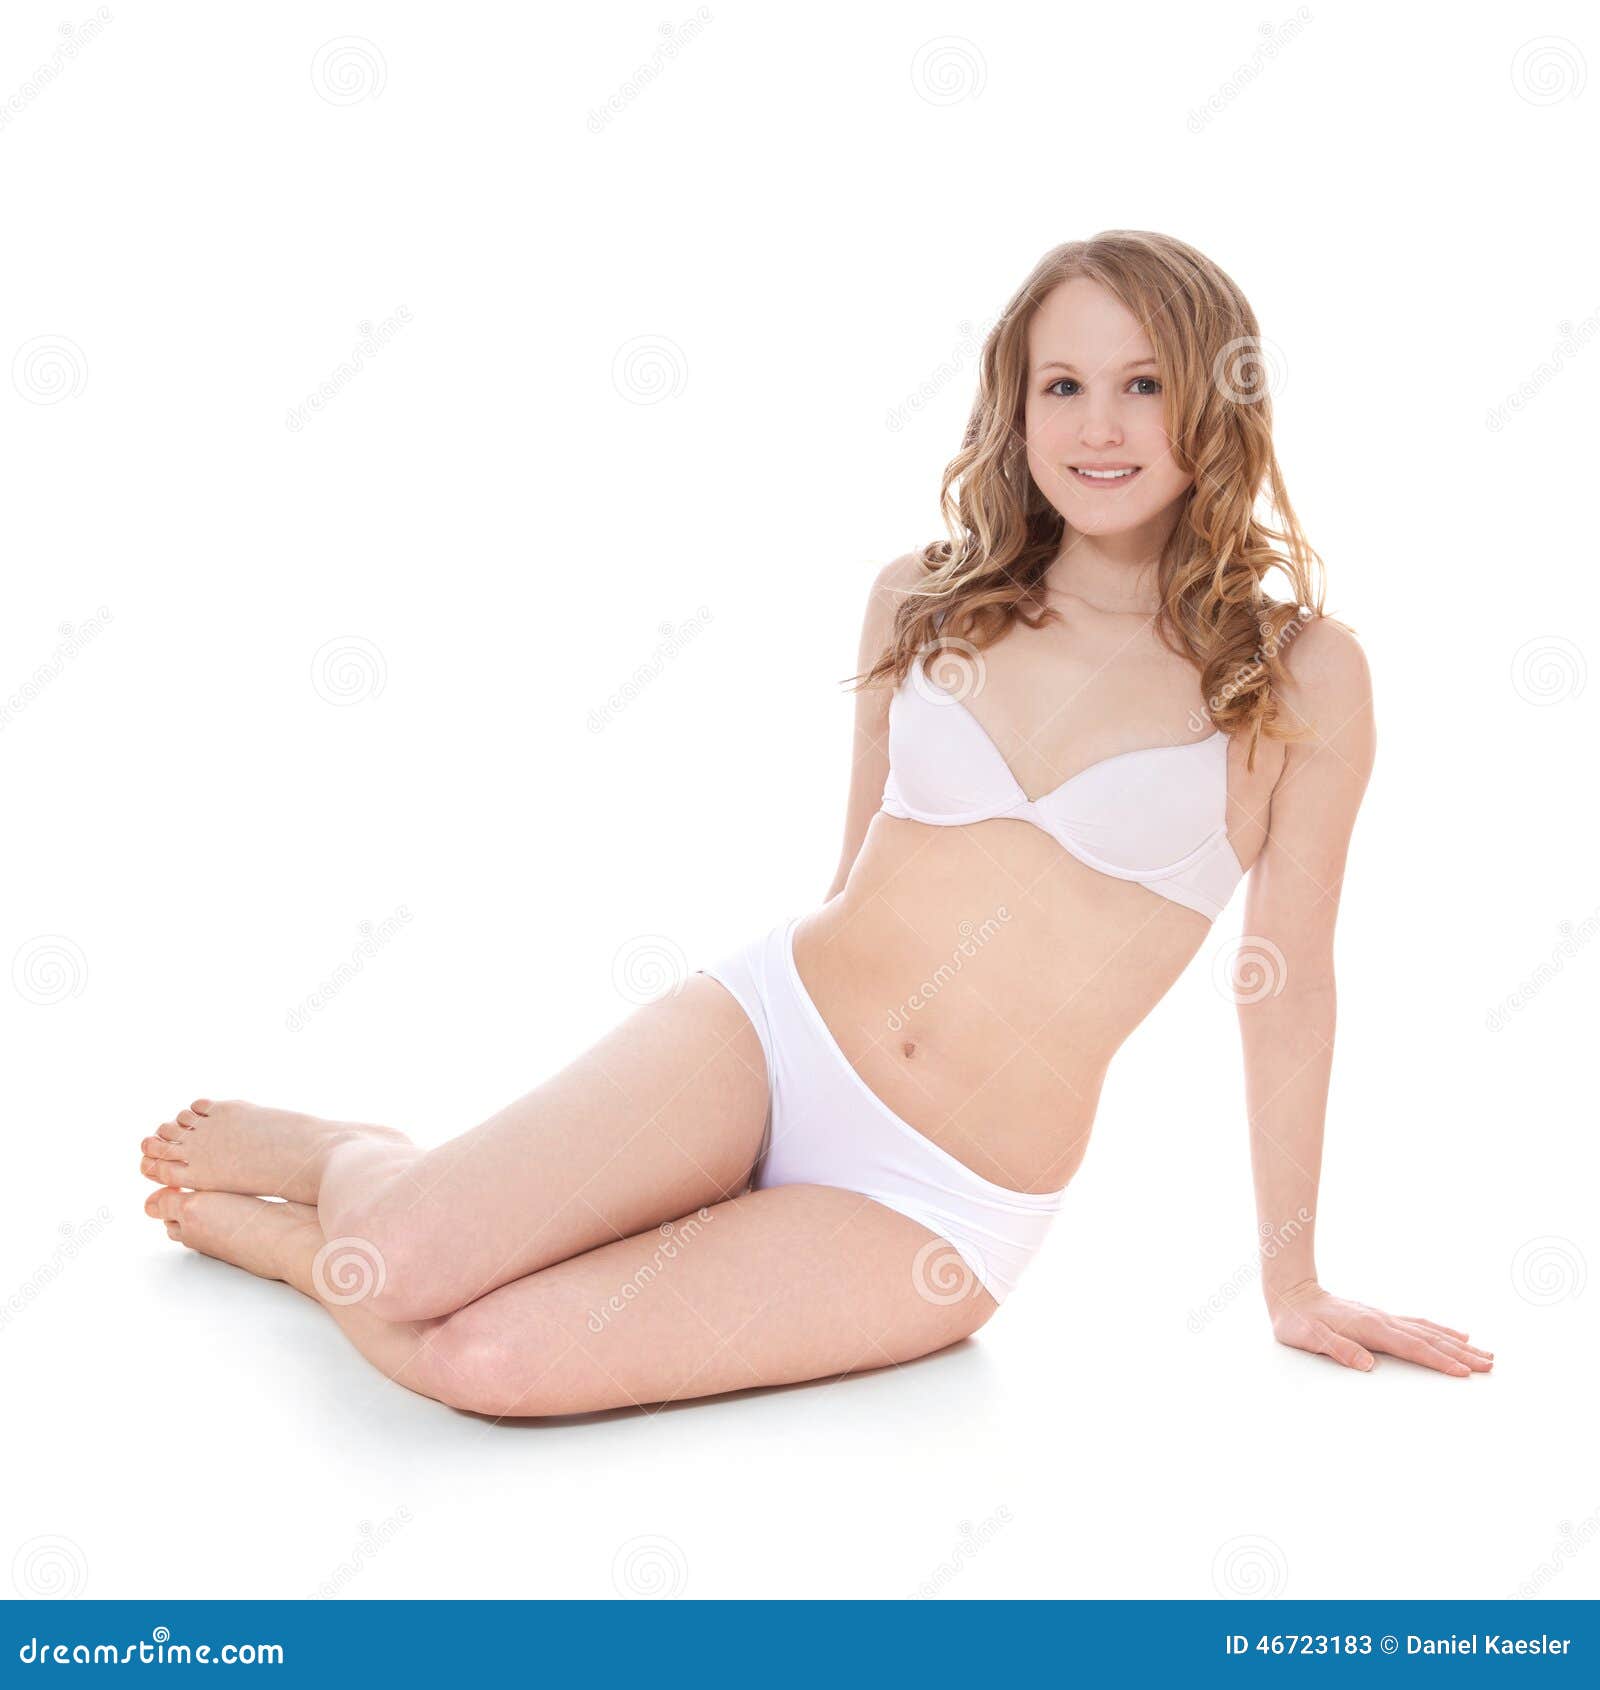 Teenage Girl in White Underwear Stock Image - Image of european, care:  46723183